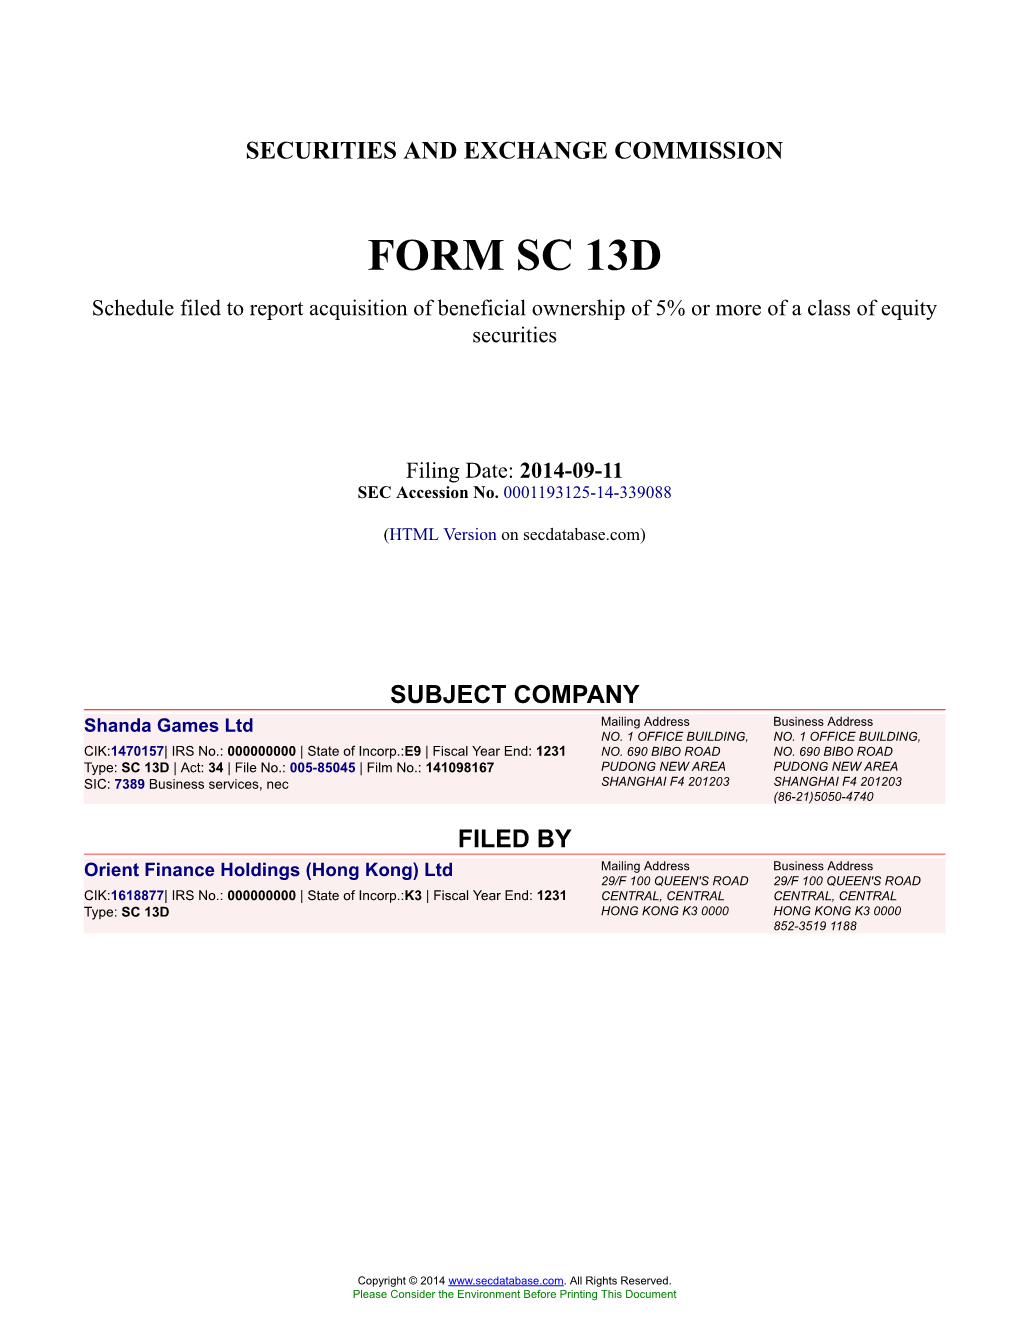 Shanda Games Ltd Form SC 13D Filed 2014-09-11